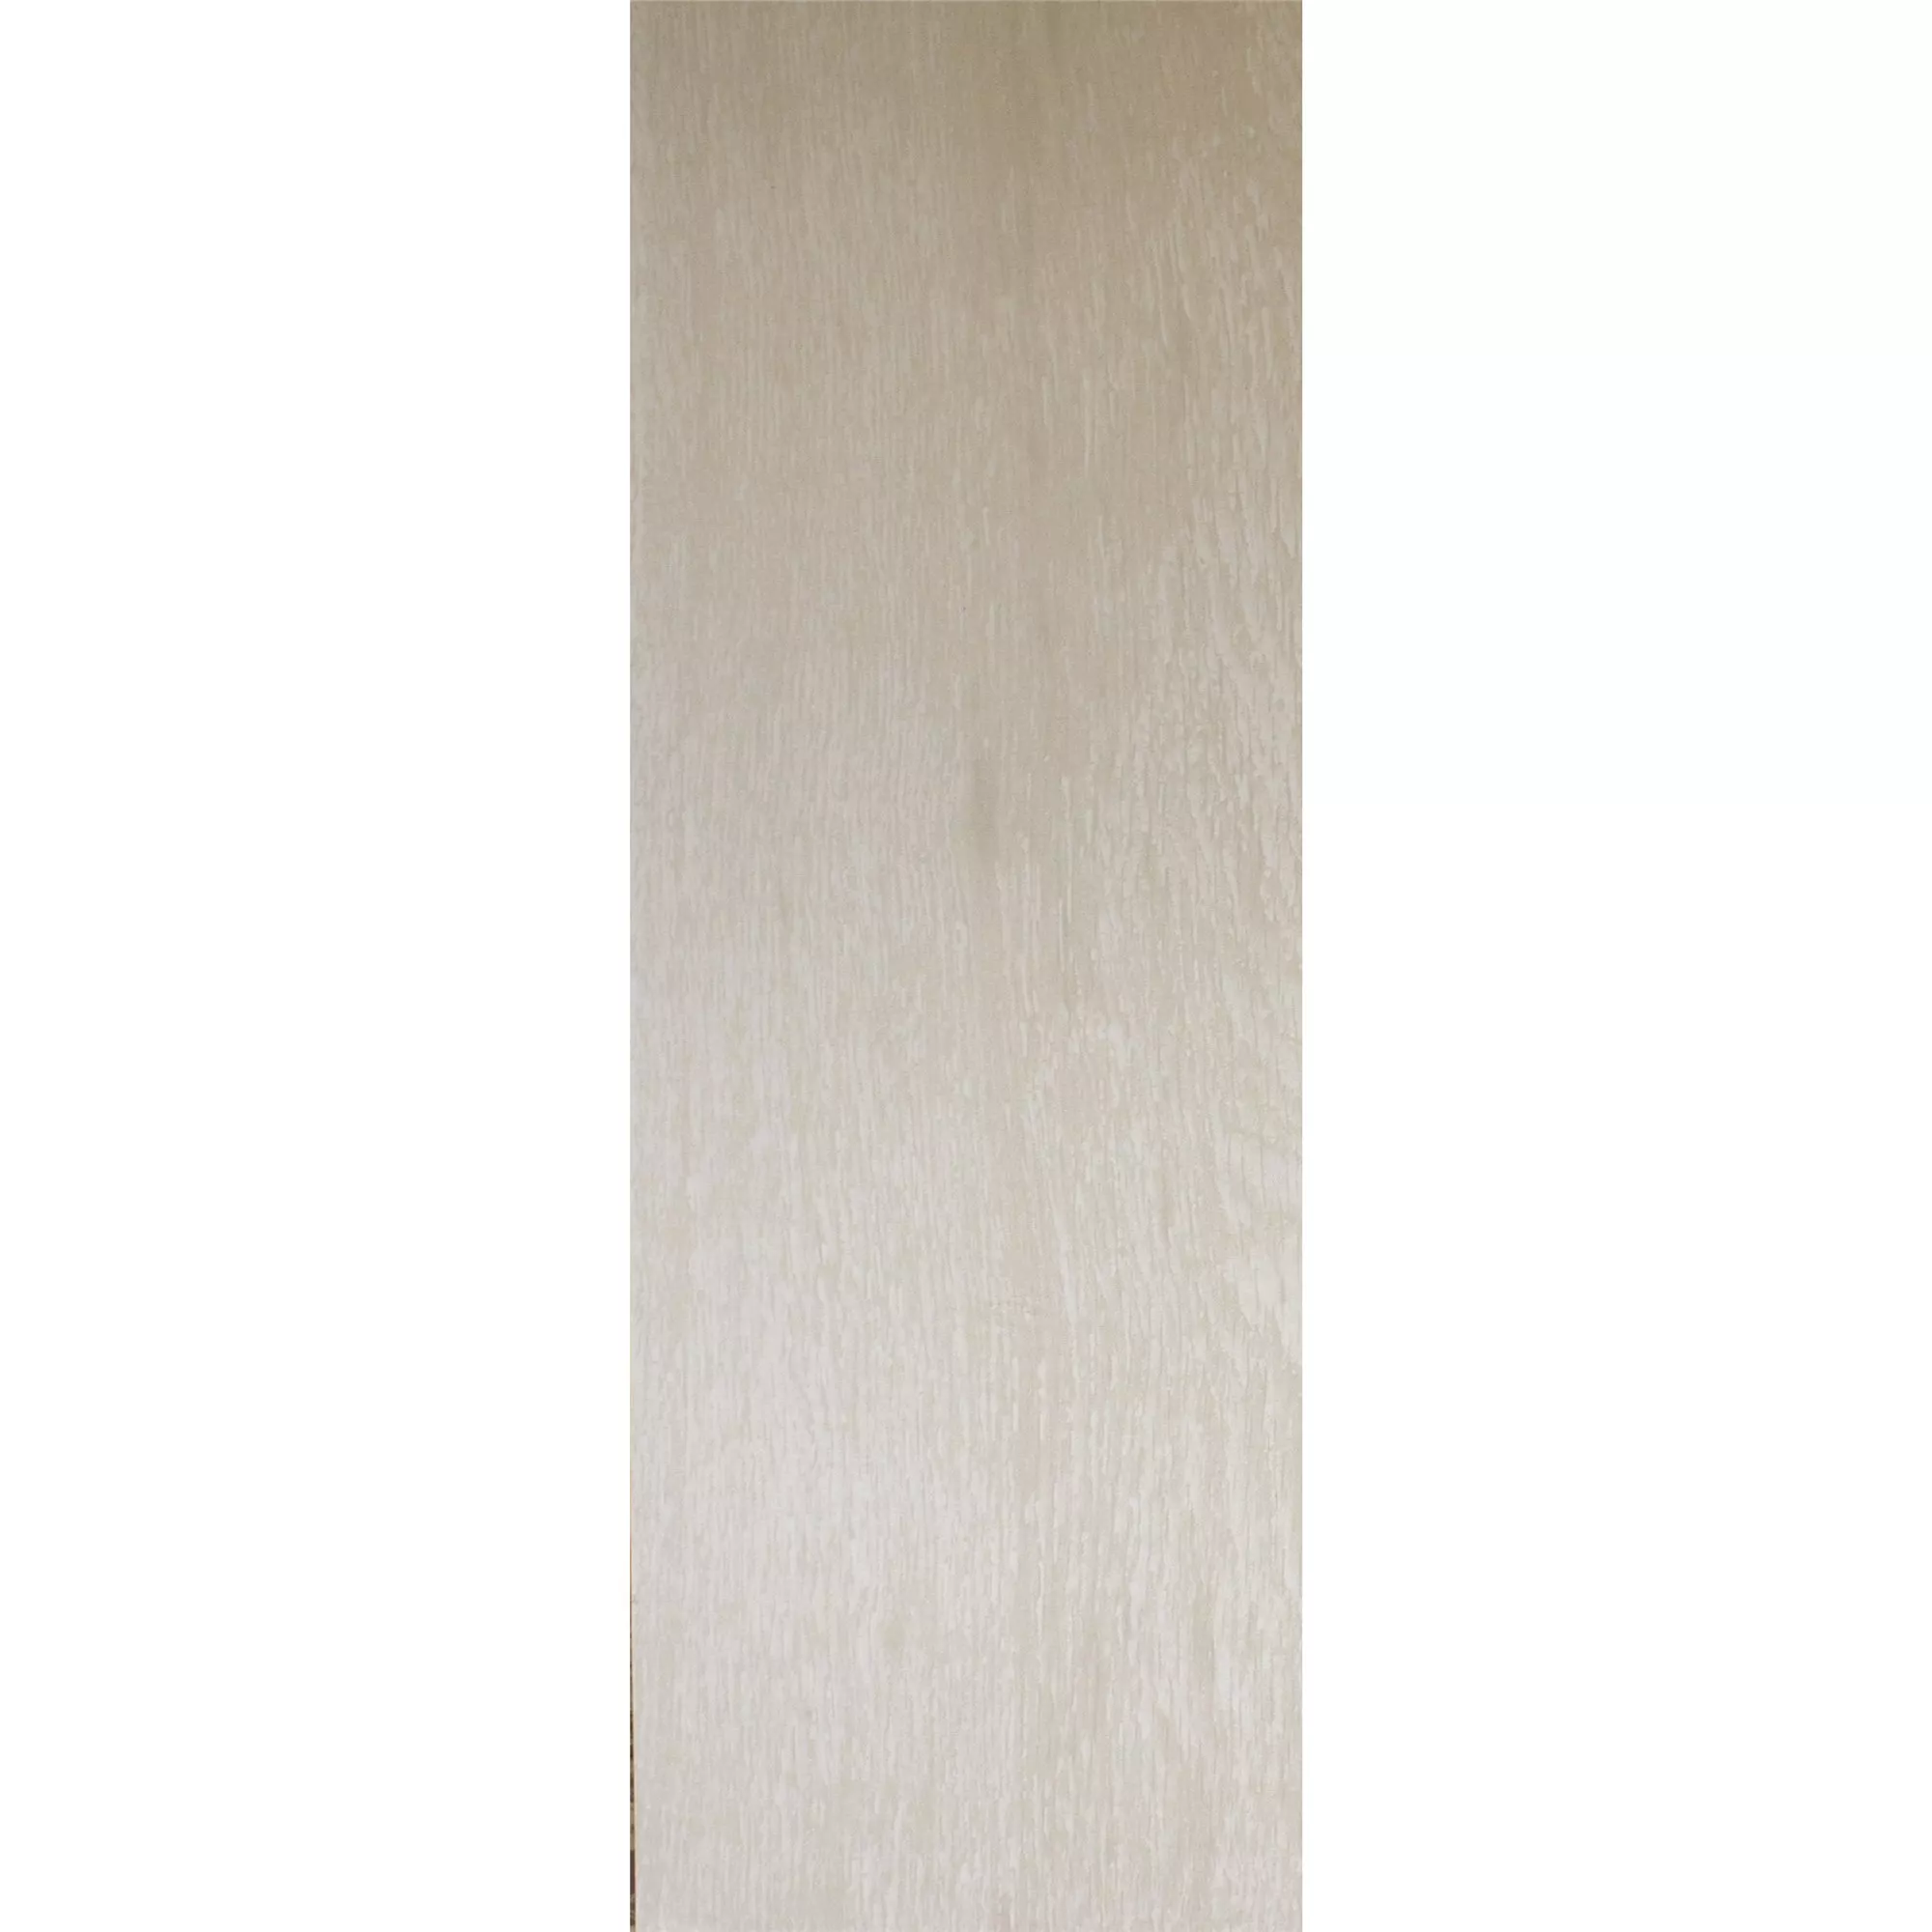 Carrelage Sol Et Mur Herakles Imitation Bois White 20x120cm